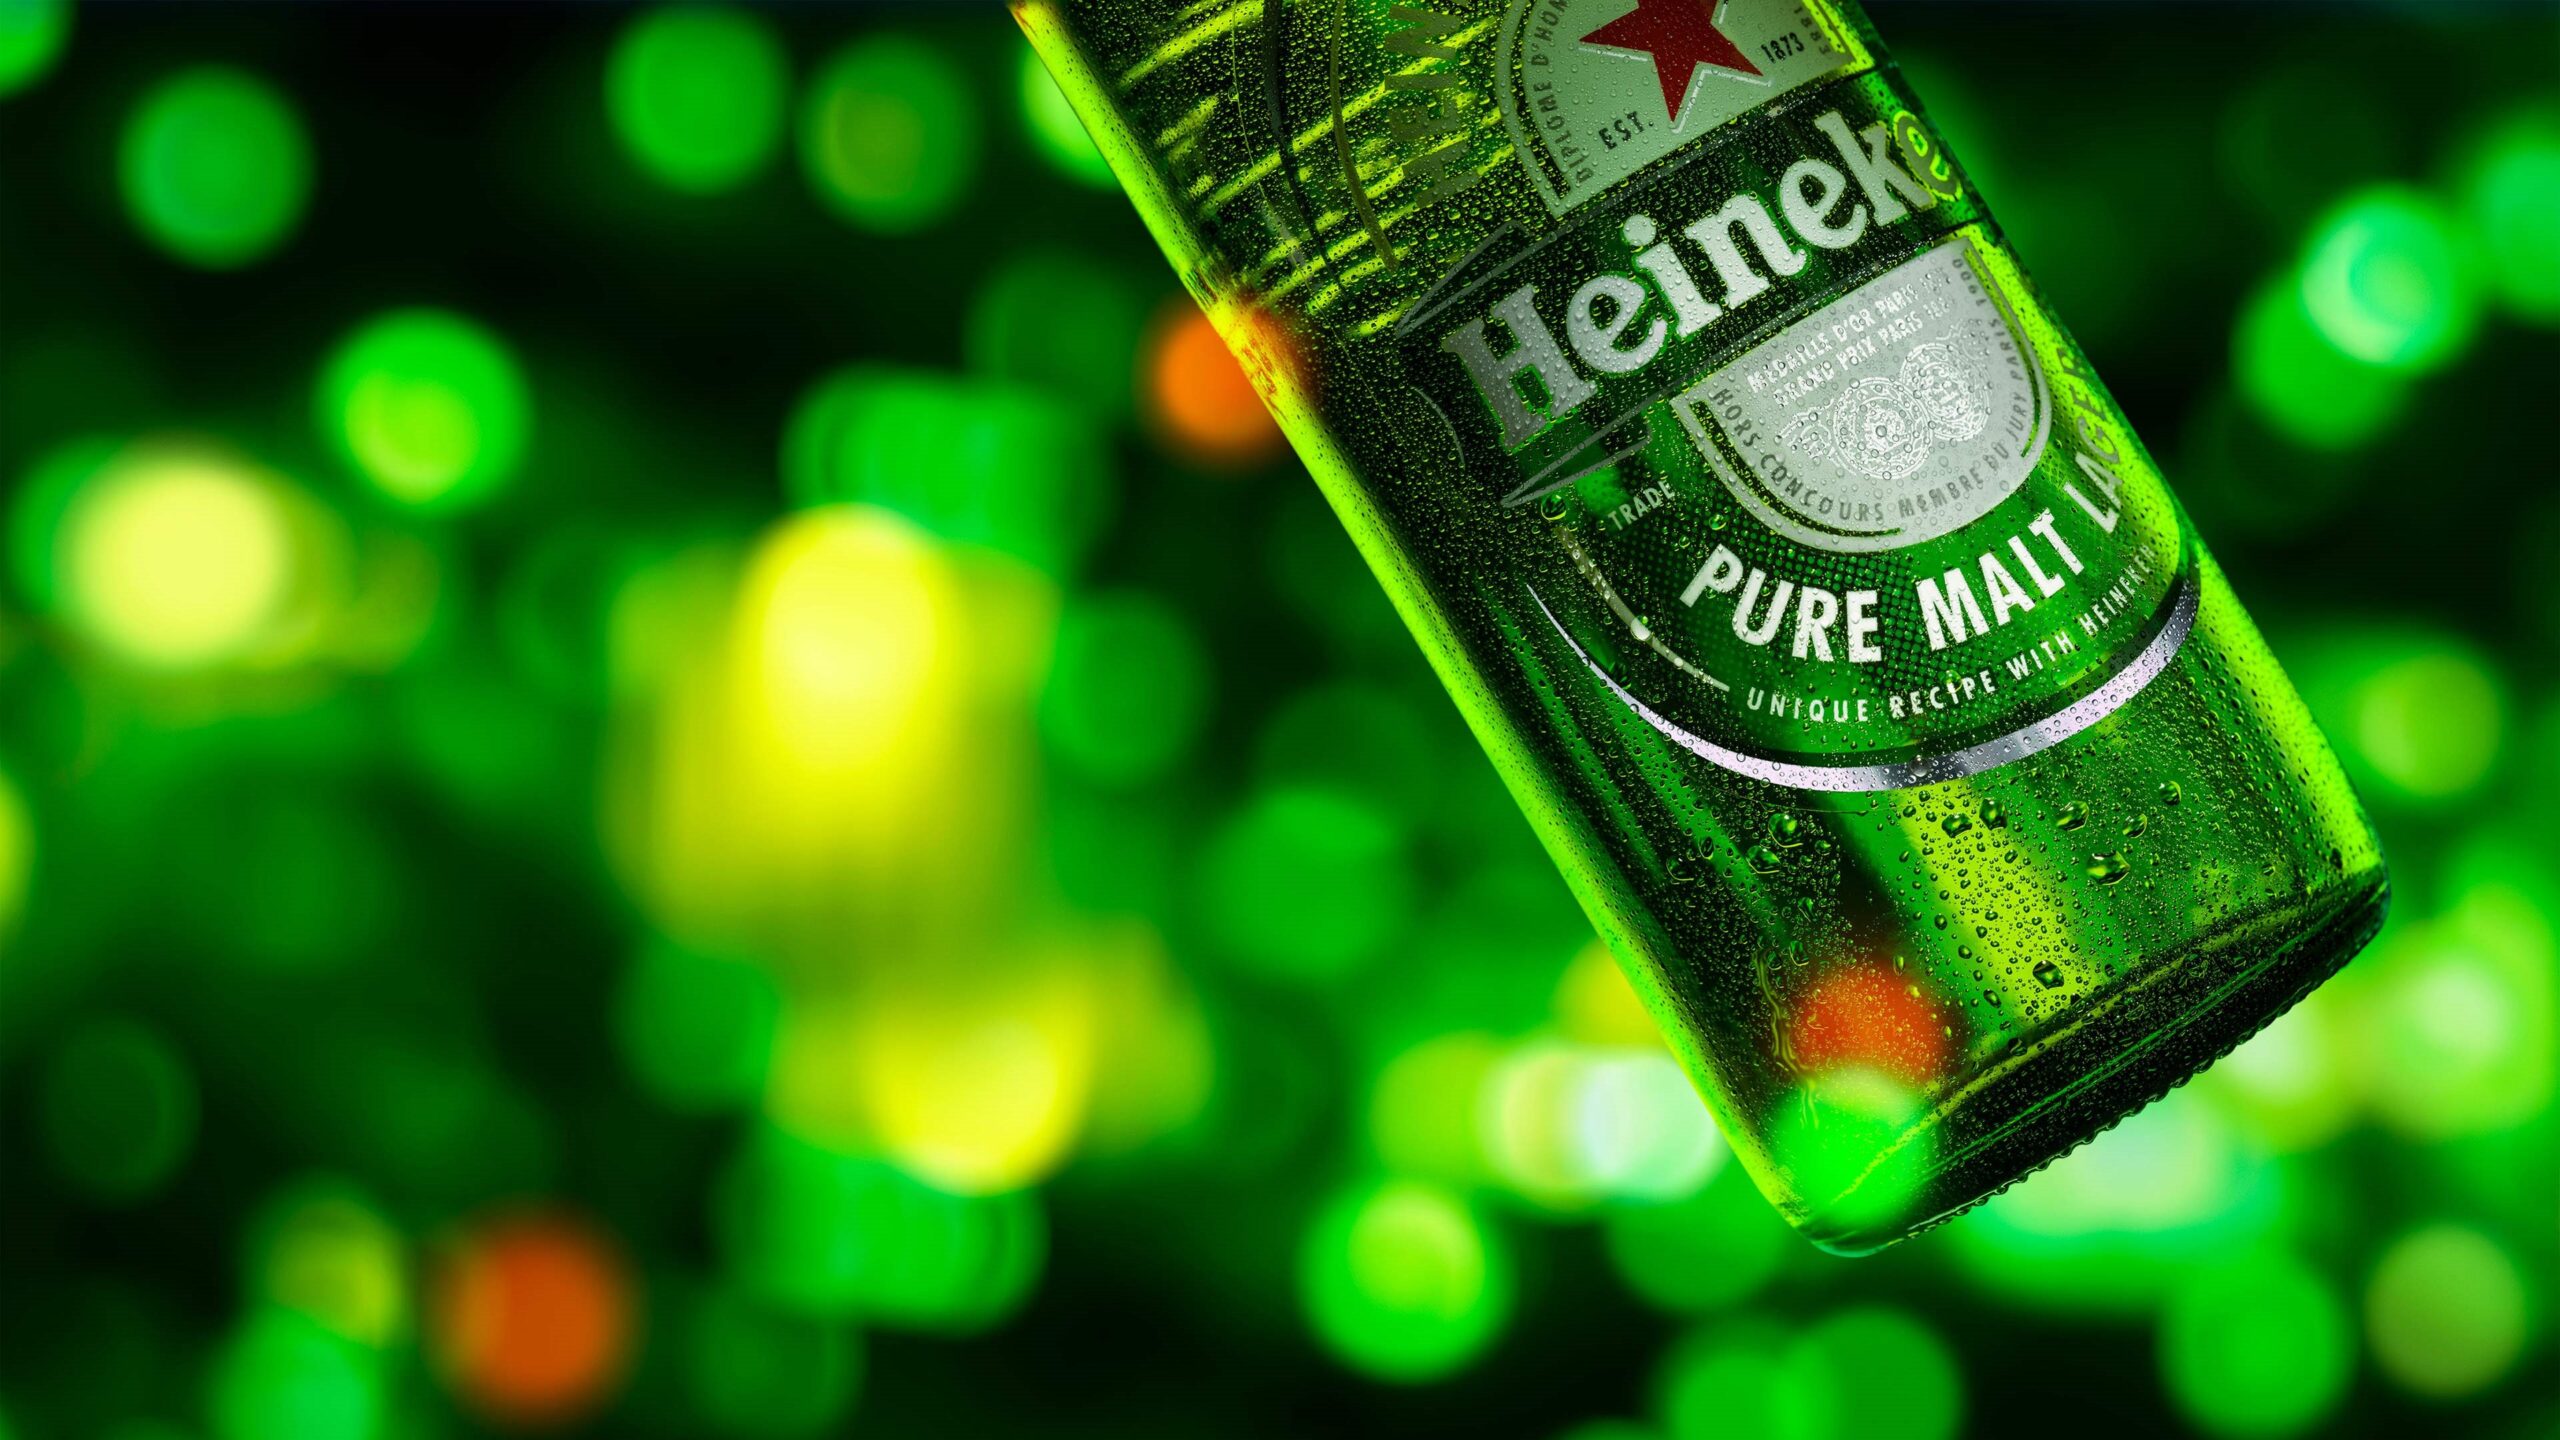 Heineken (Reprodução - Internet)--